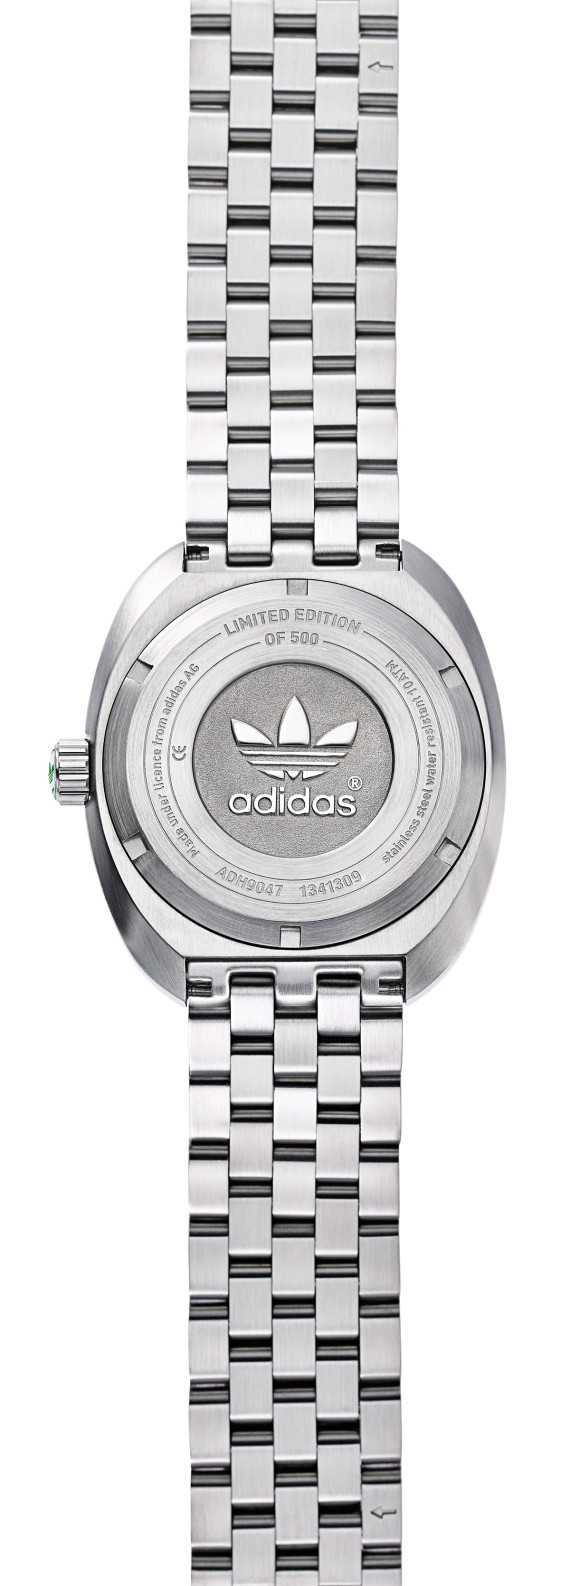 Adidas Originals Stan Smith Limited Edition Watch 07 570x1586